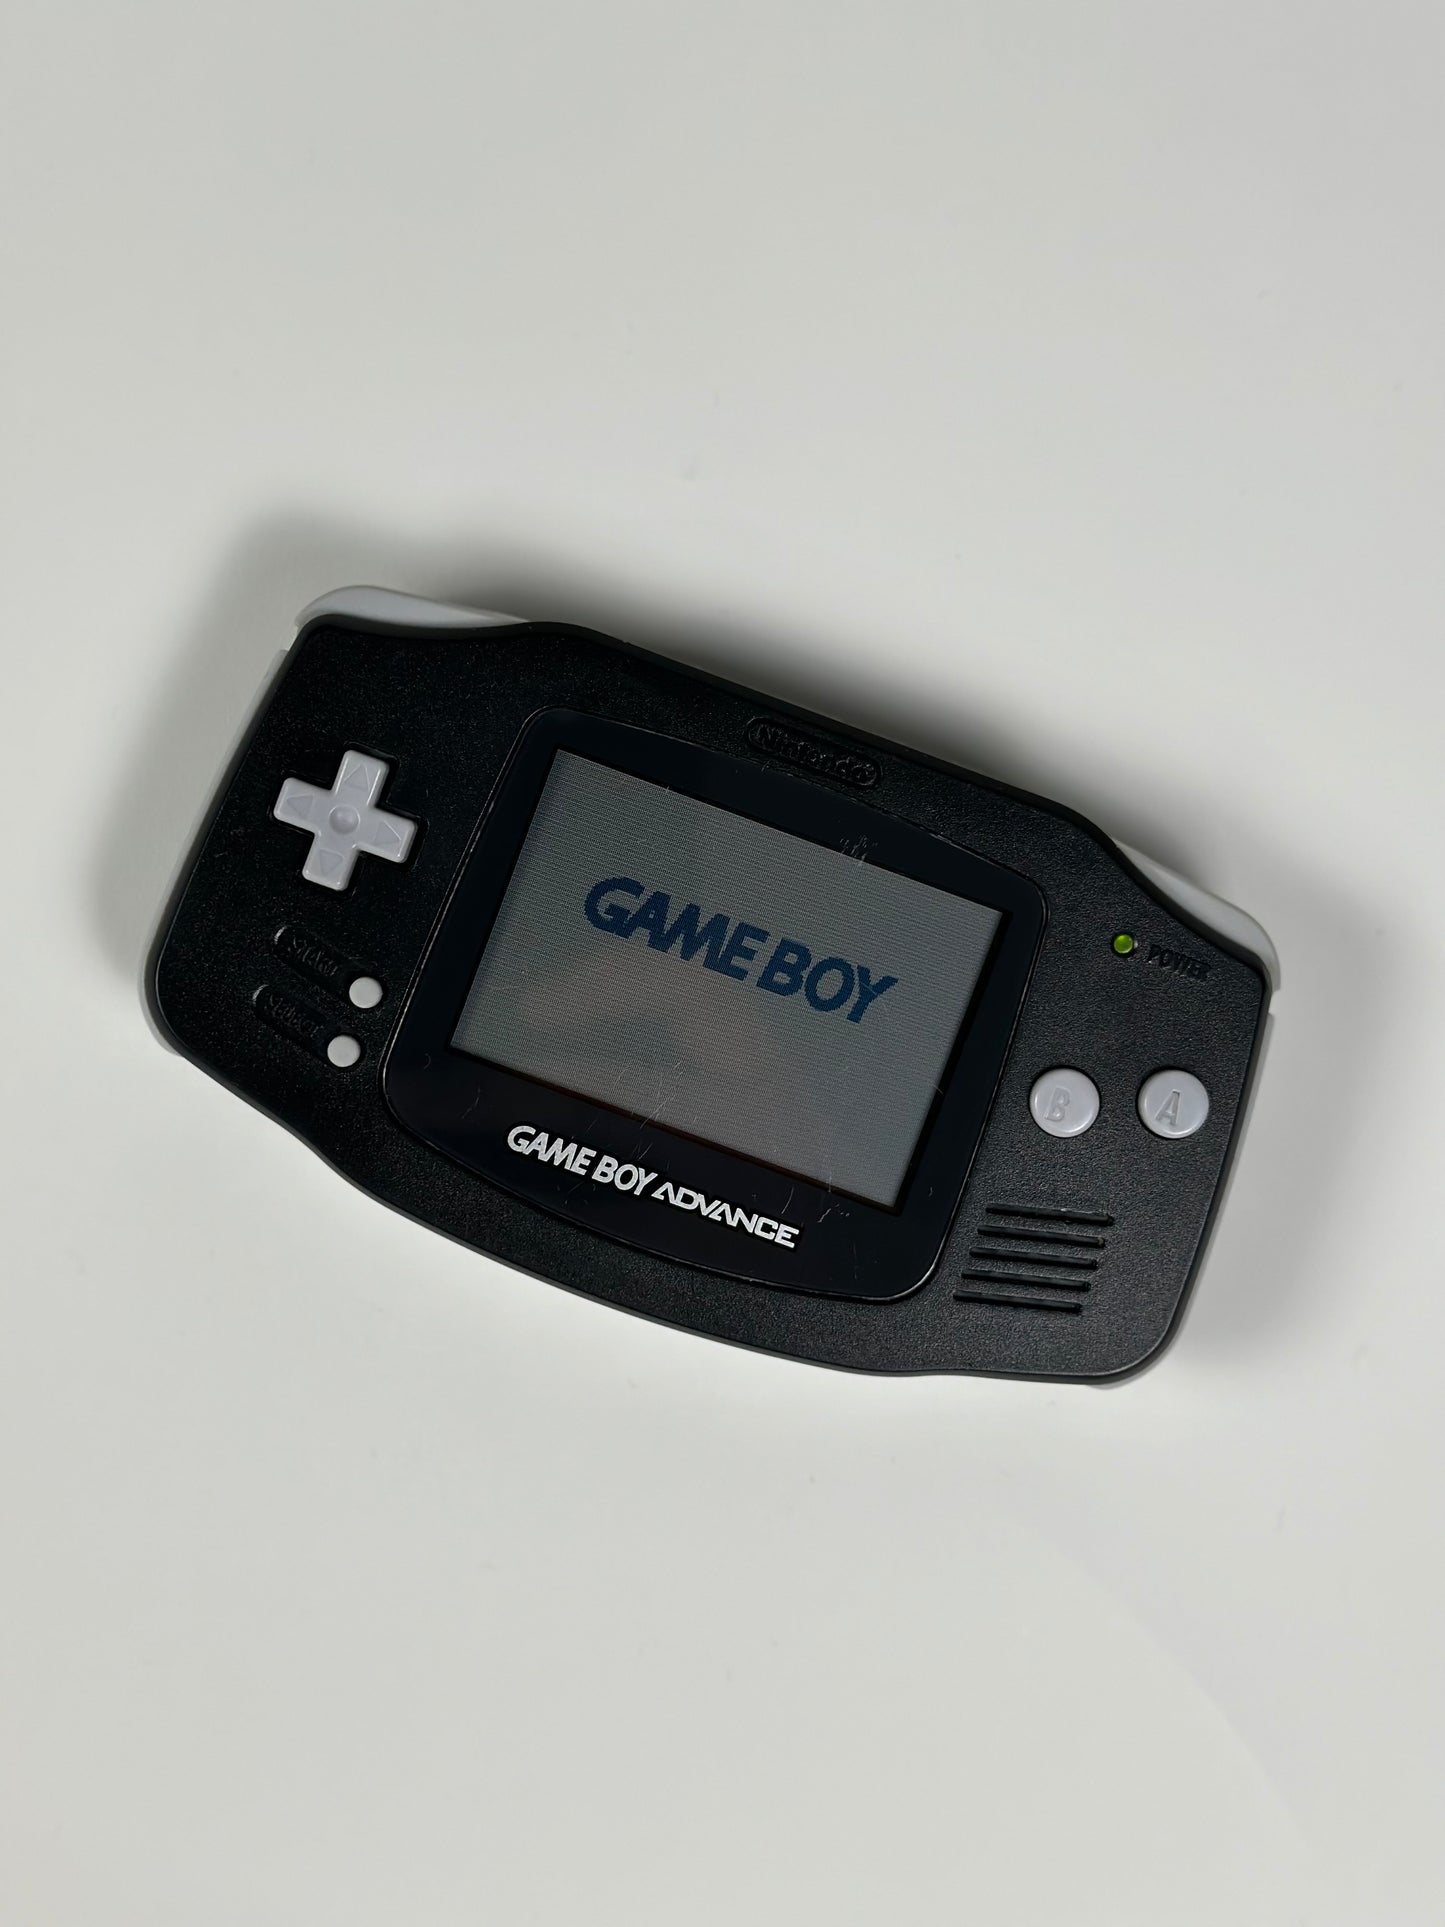 GAMEBOY Advance (Nintendo)